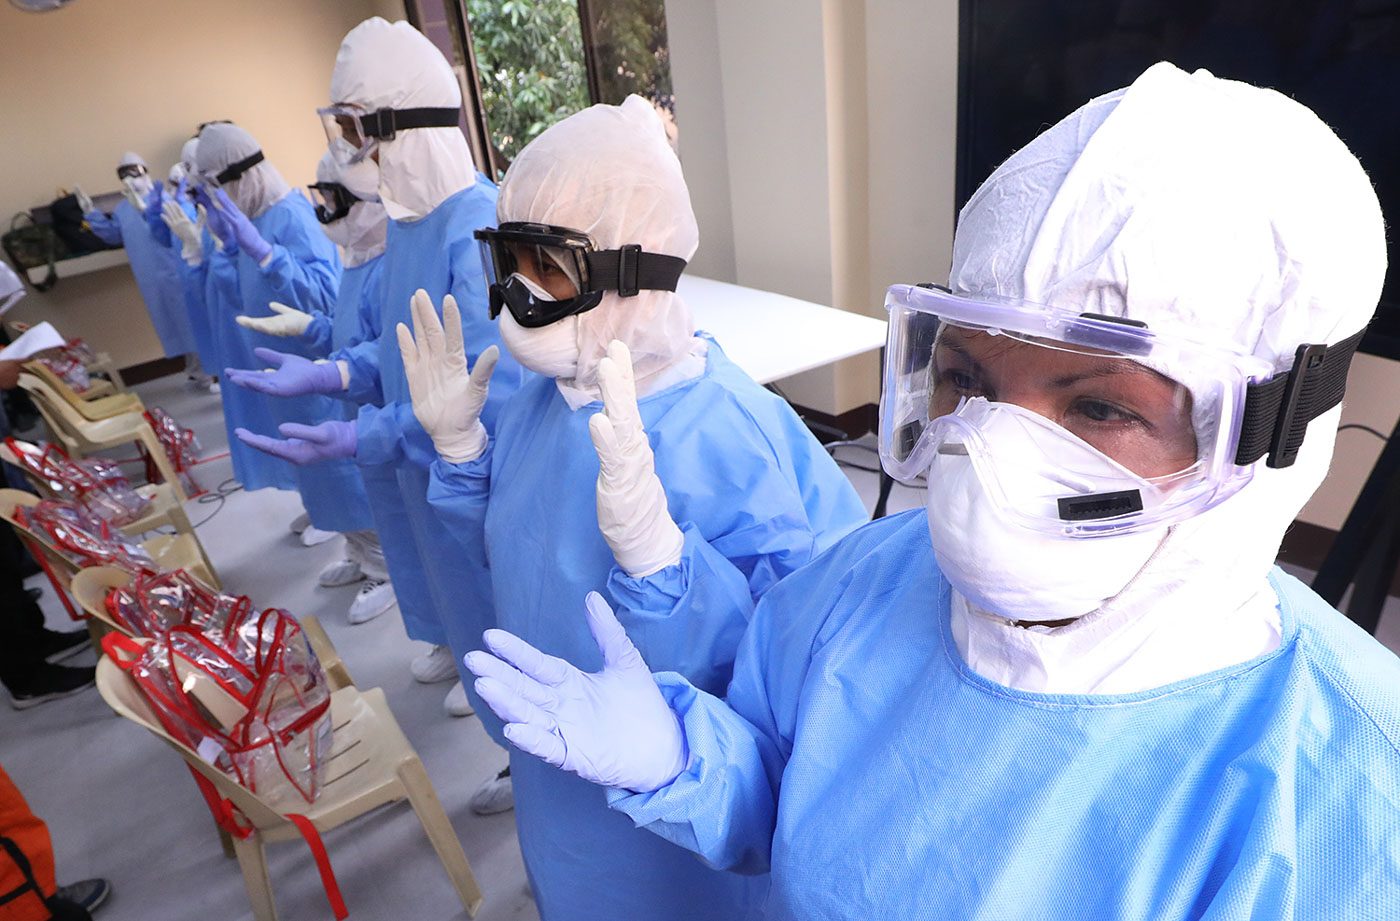 Coronavirus-infected doctor dies ‘while fulfilling his duties’